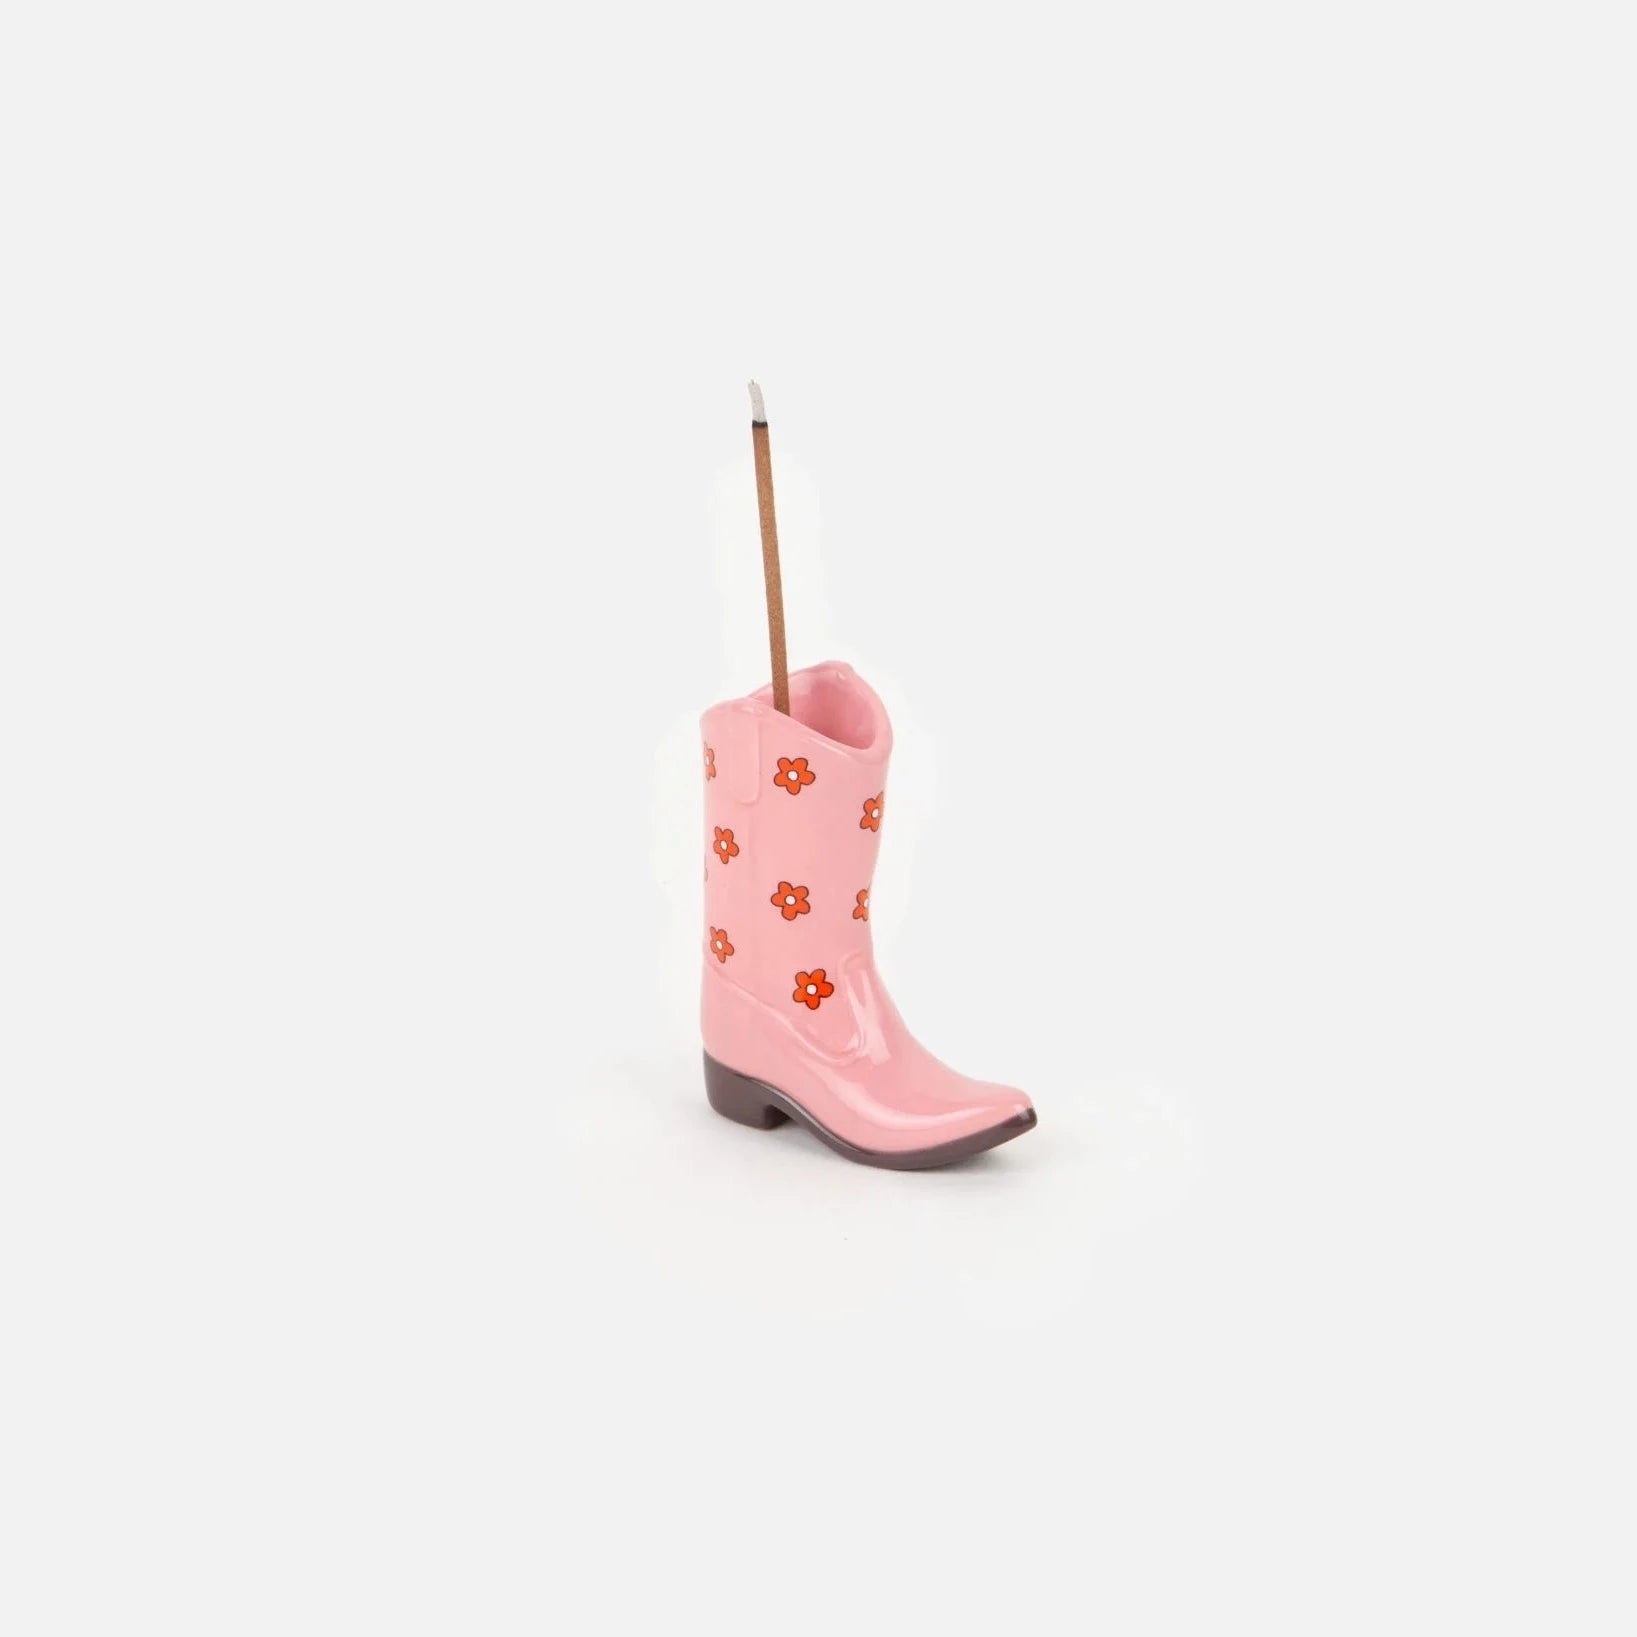 Incense holder Cowboy Boot Pink - Doiy